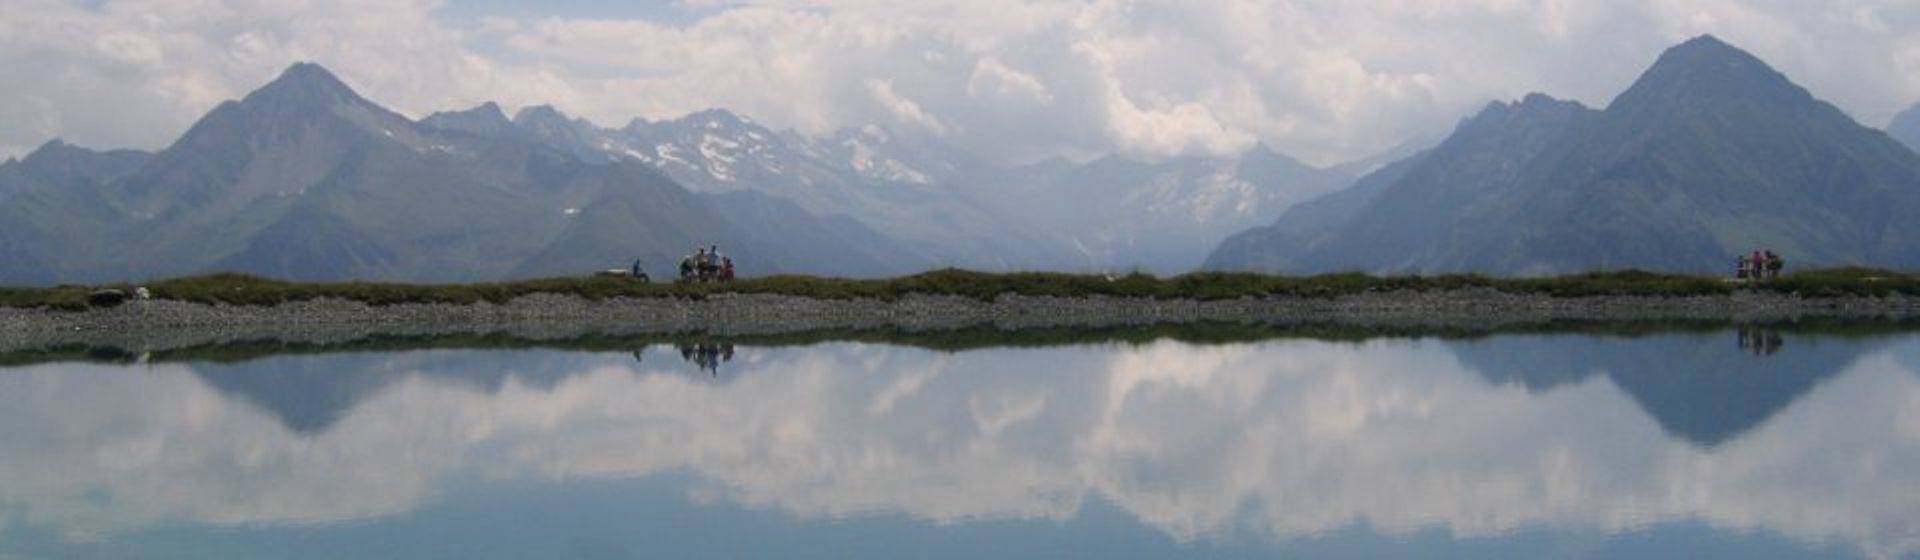 Holidays to Mayrhofen Image